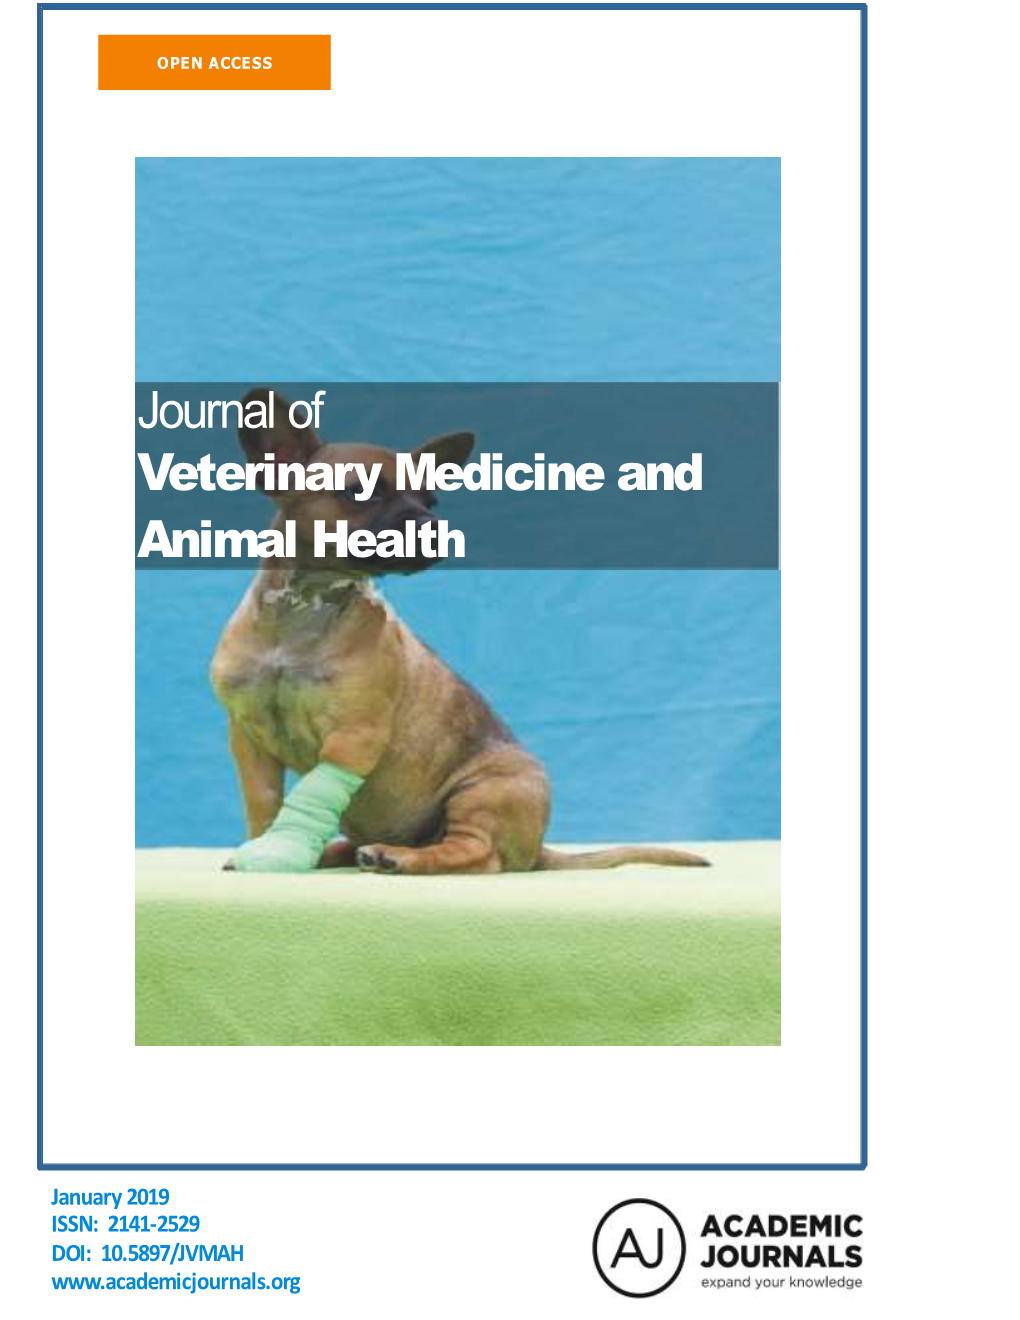 Journal of Veterinary Medicine and Animal Health